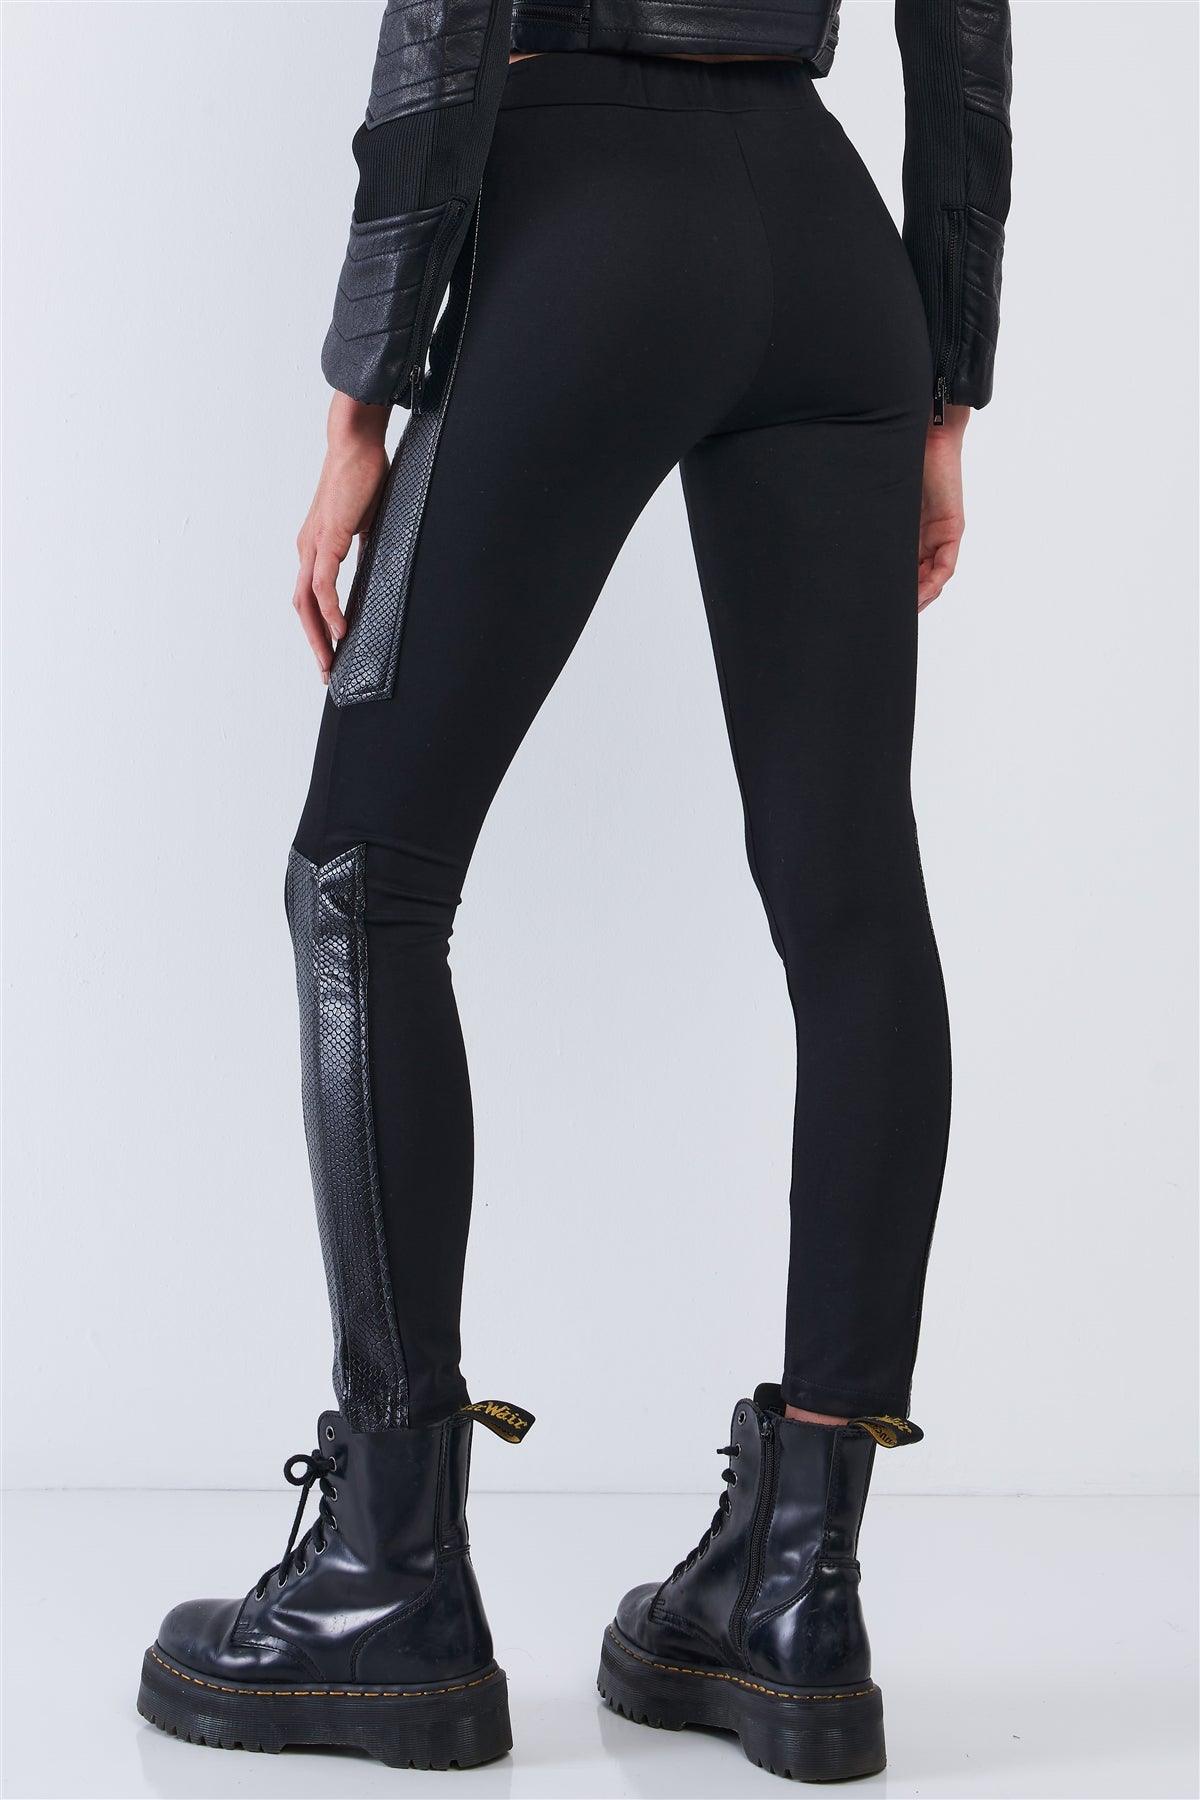 Black High Waisted Vegan Leather Python Print Trim Side Zipper Detail Tight Fit Legging Pants /2-2-2